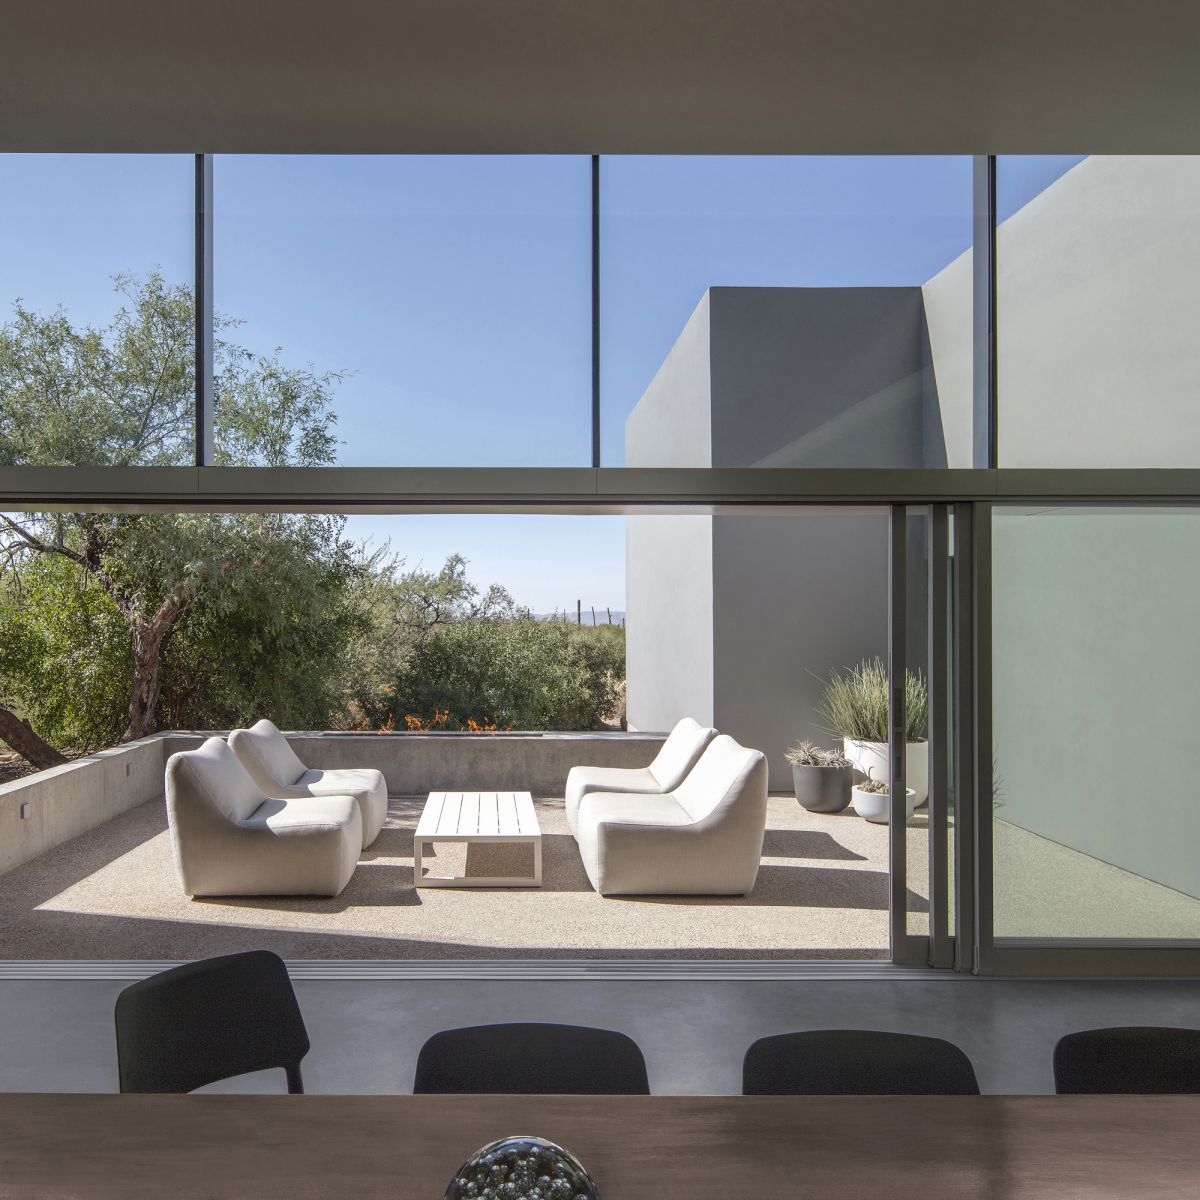 Canyon-Desert-House-in-Tucson-Arizona-by-HK-Associates-Inc-28